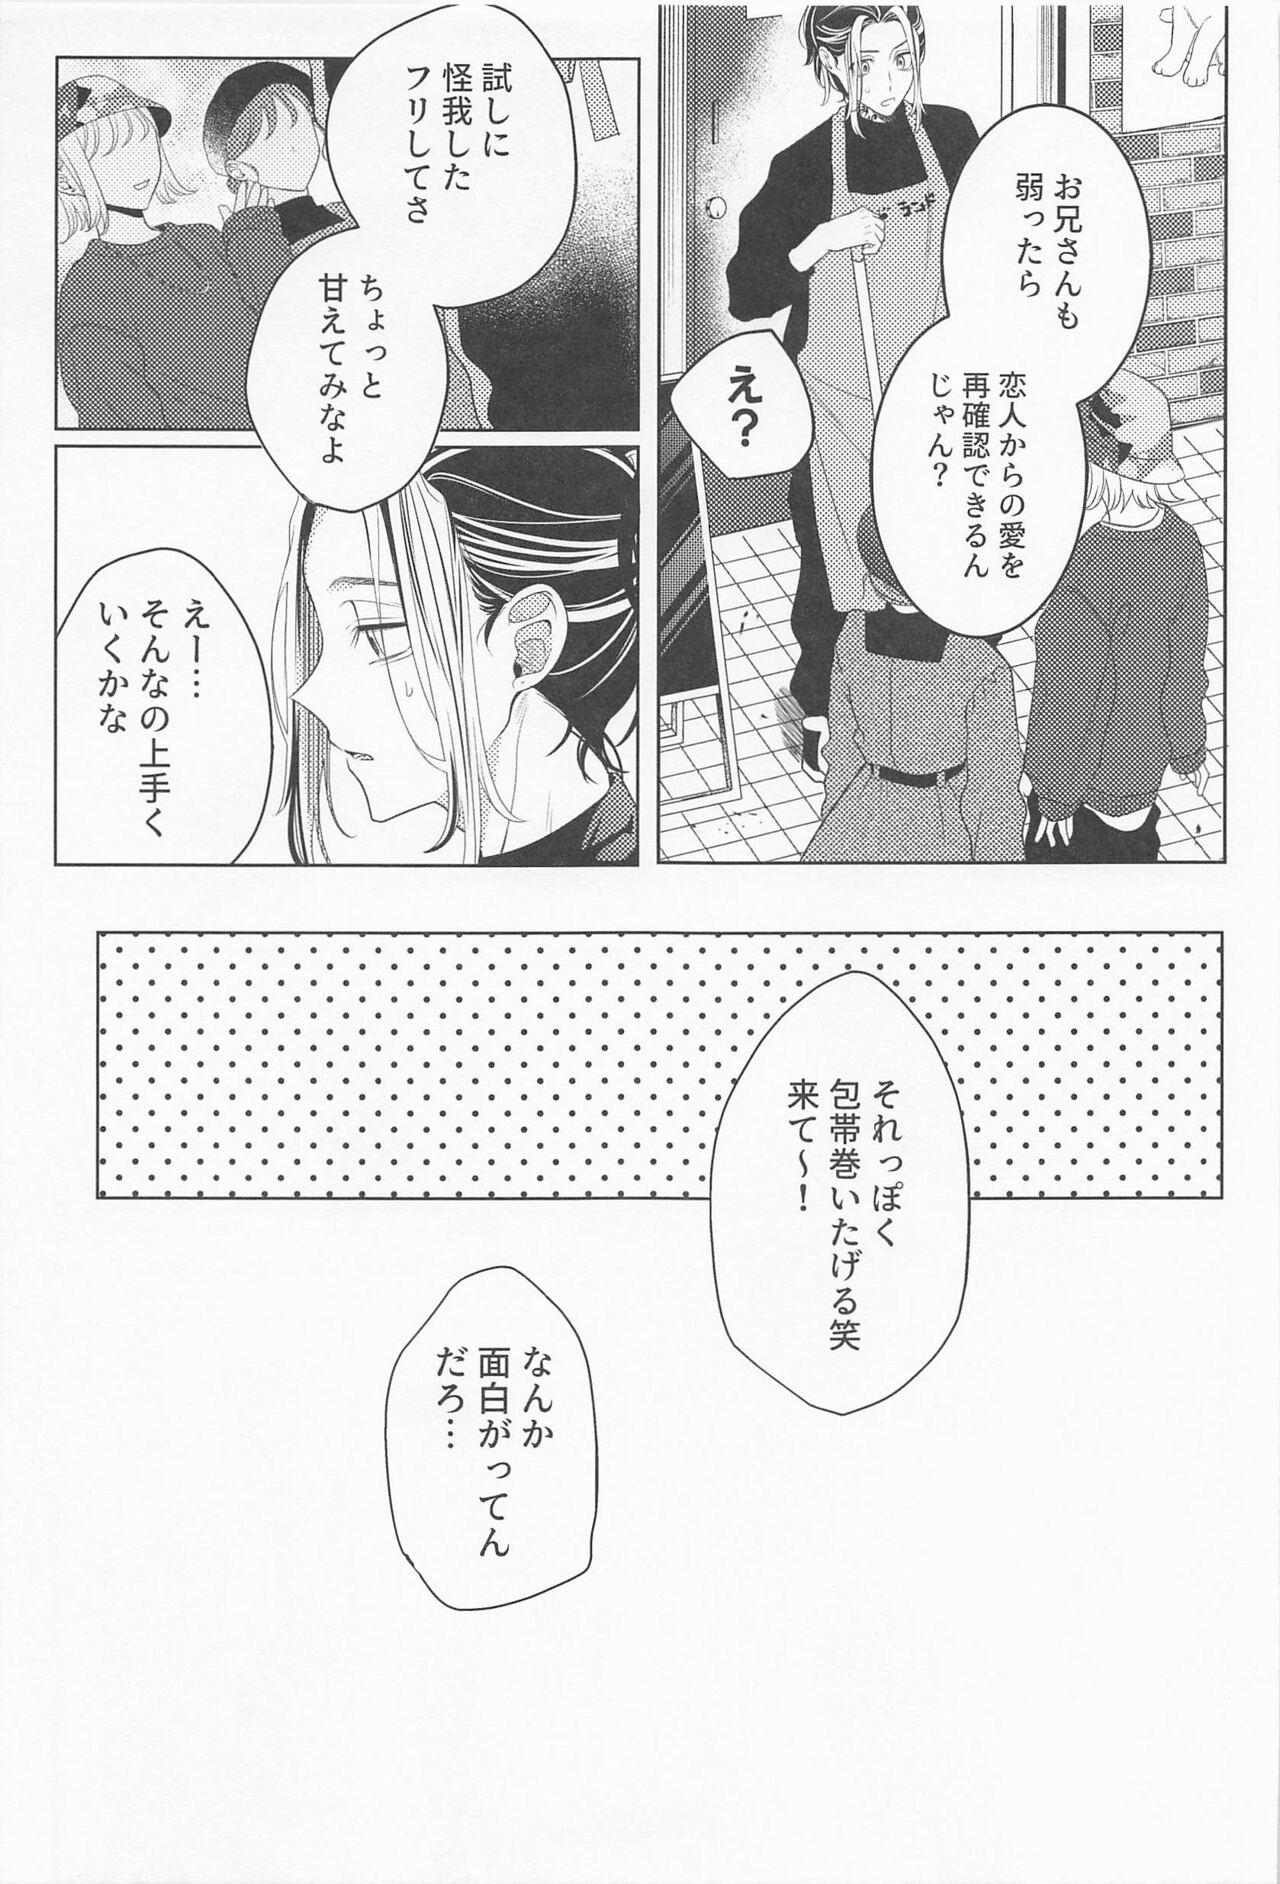 Culito sukidakarashimpaishite - Tokyo revengers Oldvsyoung - Page 6